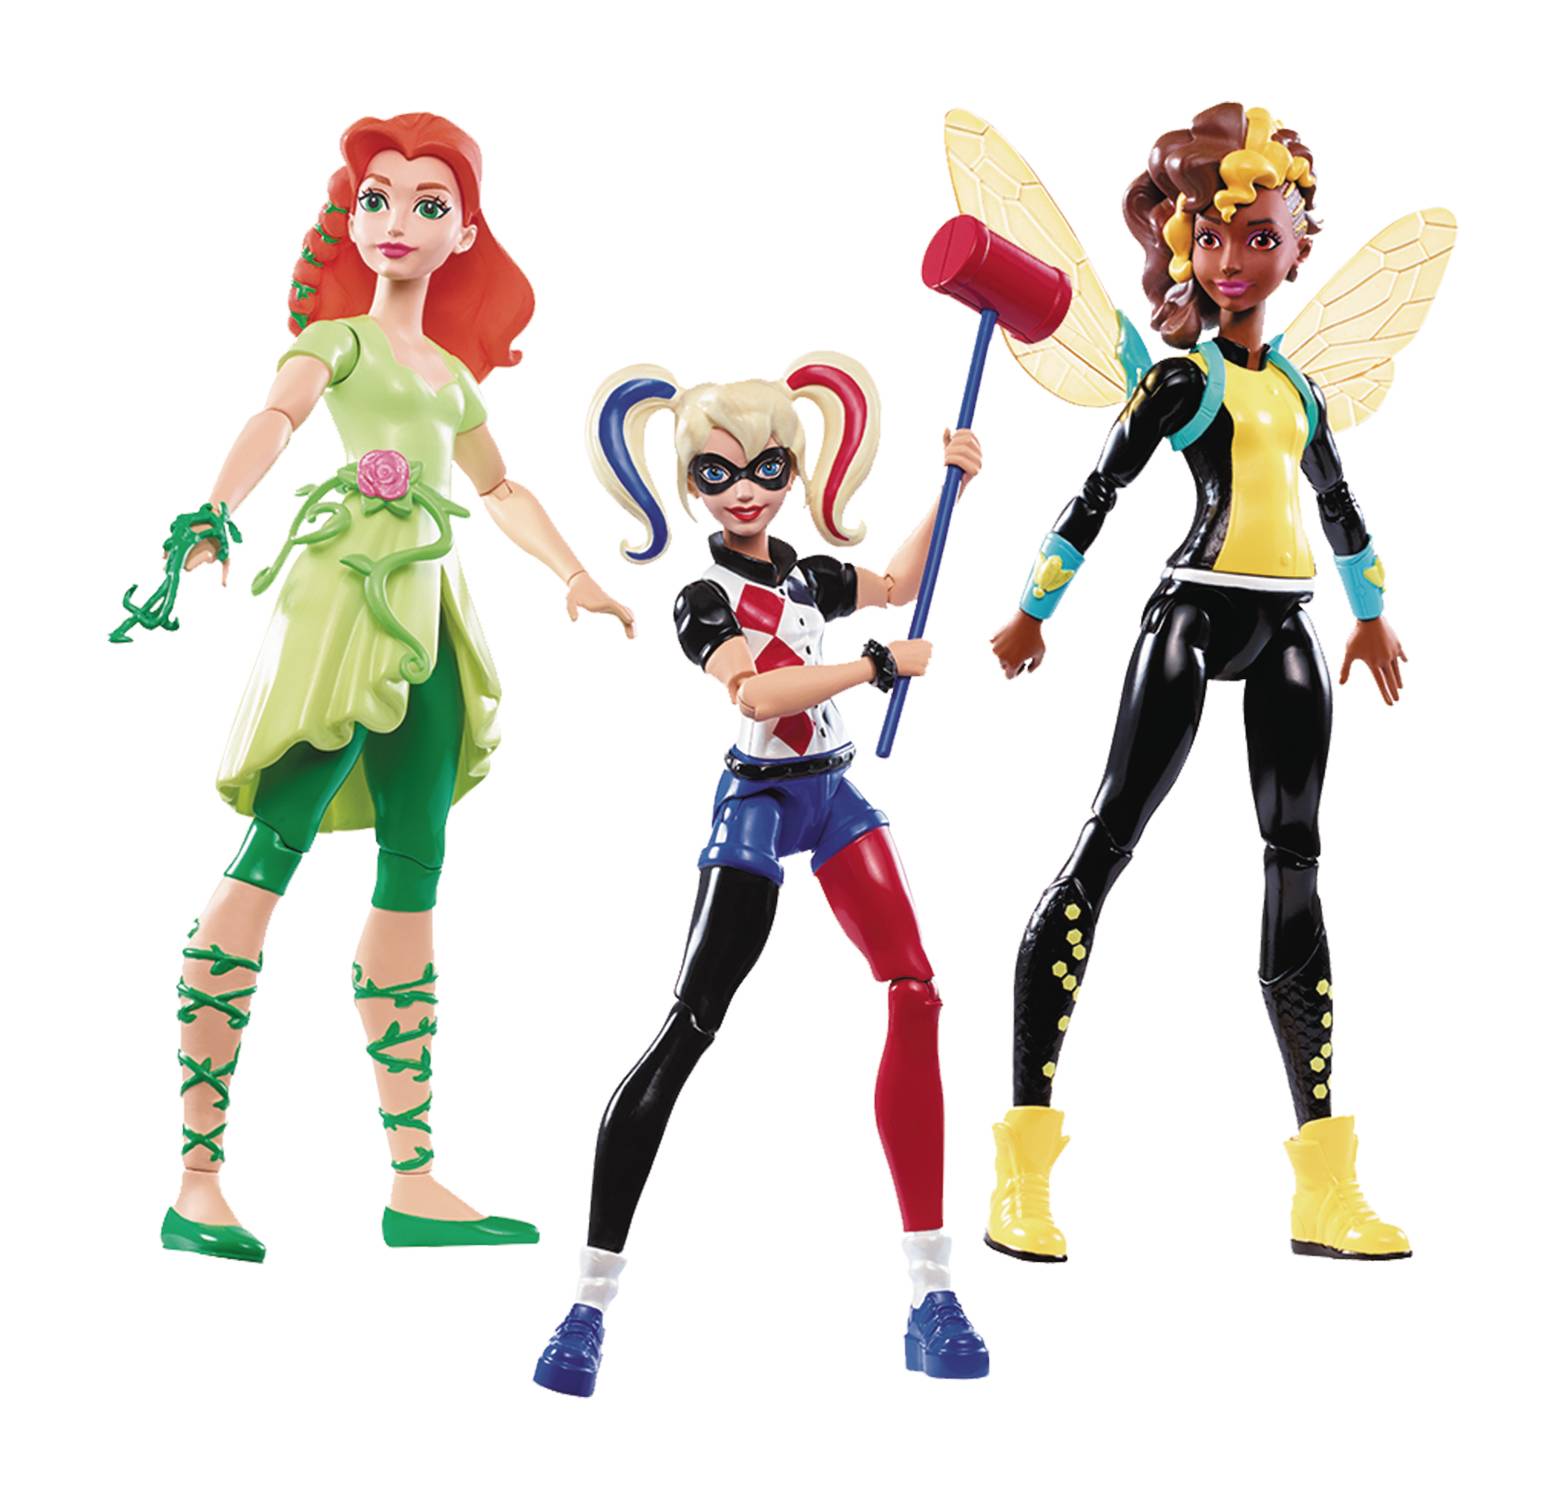 DC Super Hero Girls Non Core Character 6 Inch Action Figure Assortment